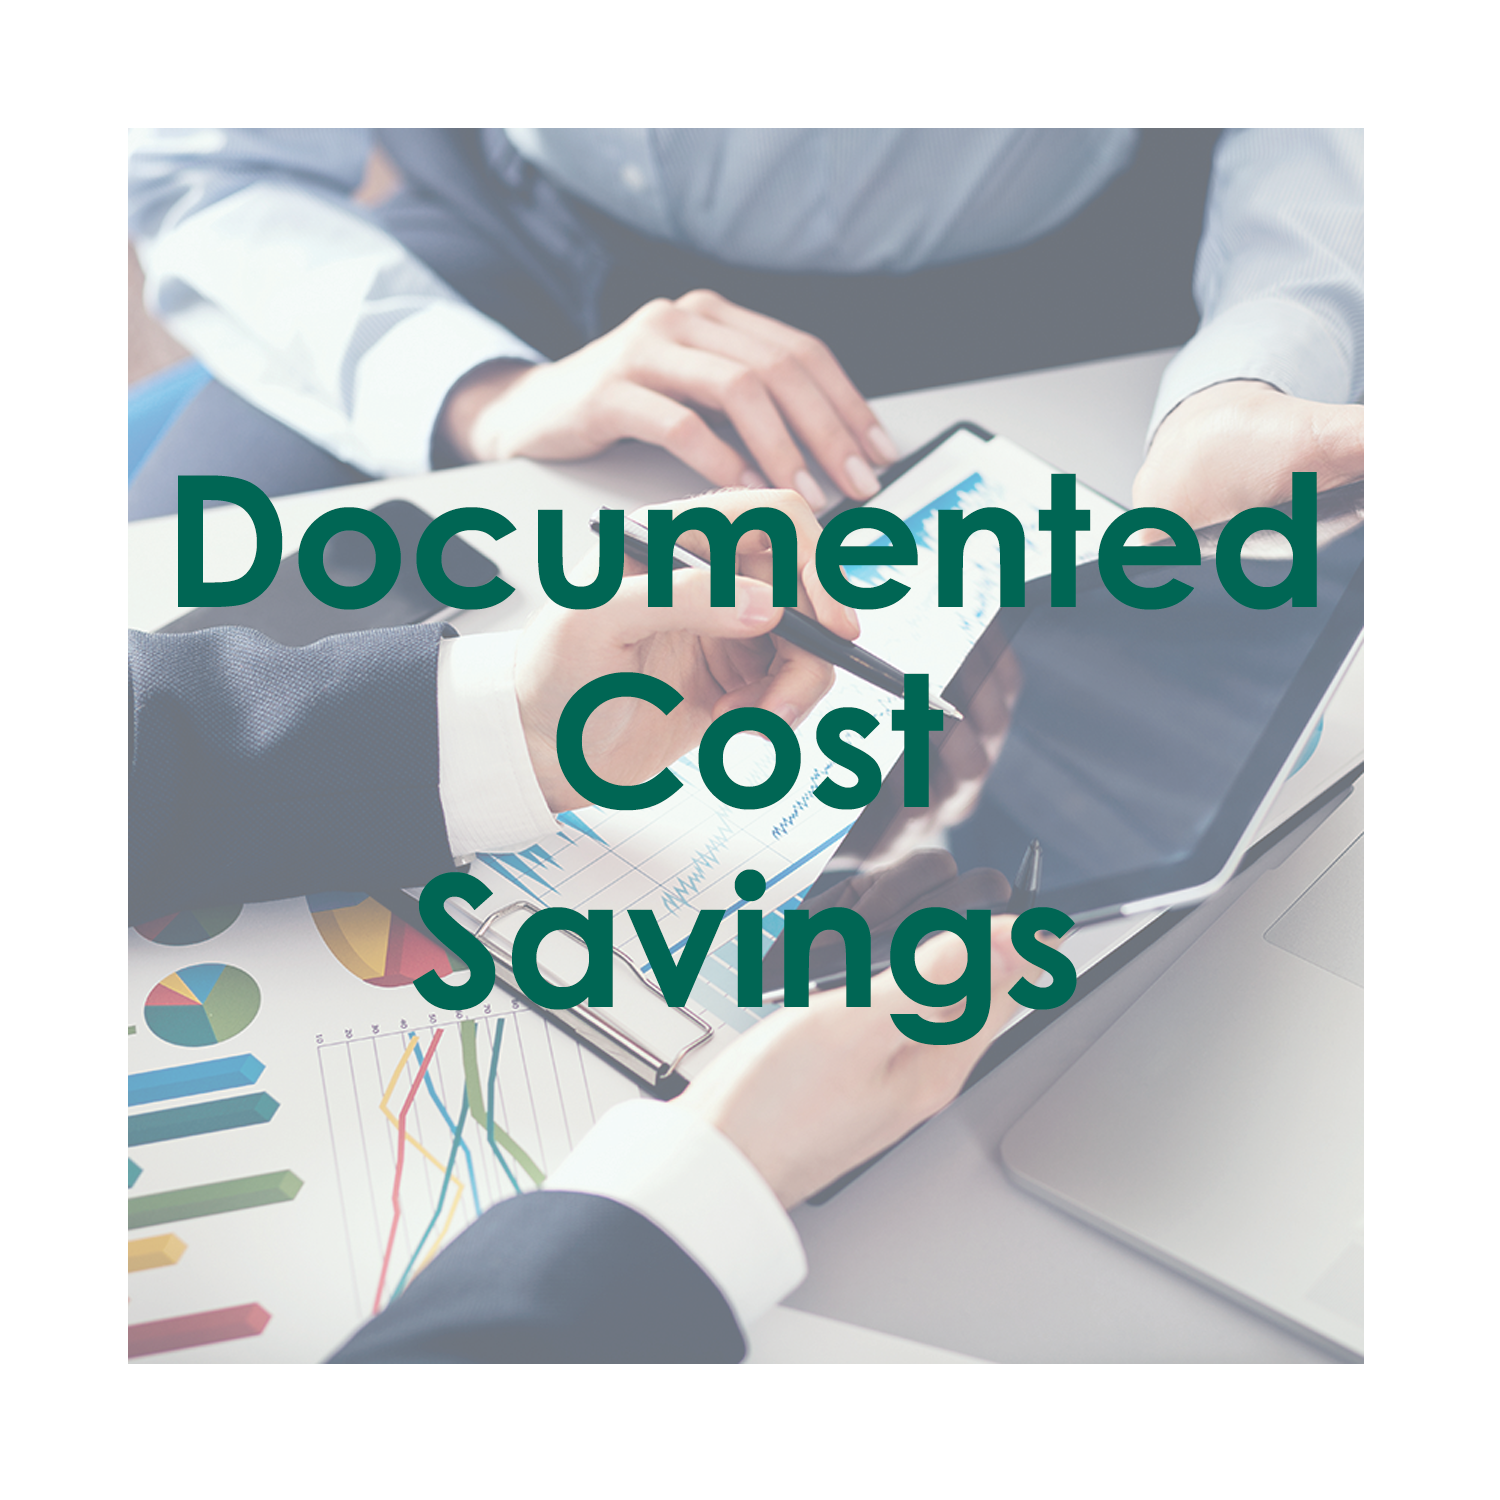 Documented Cost Savings